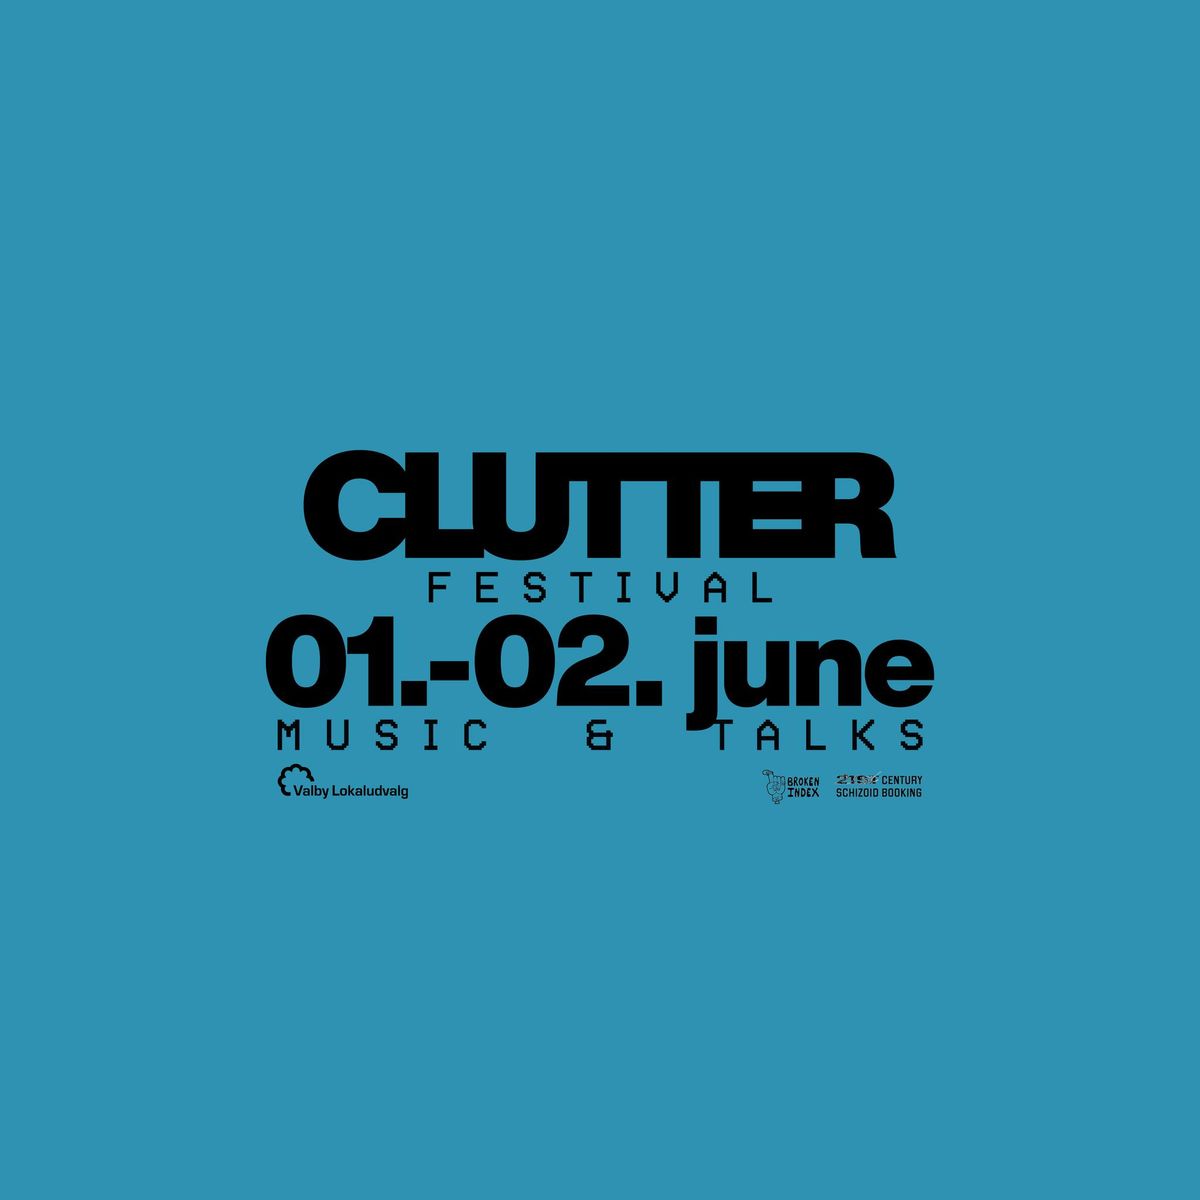 Clutter Festival